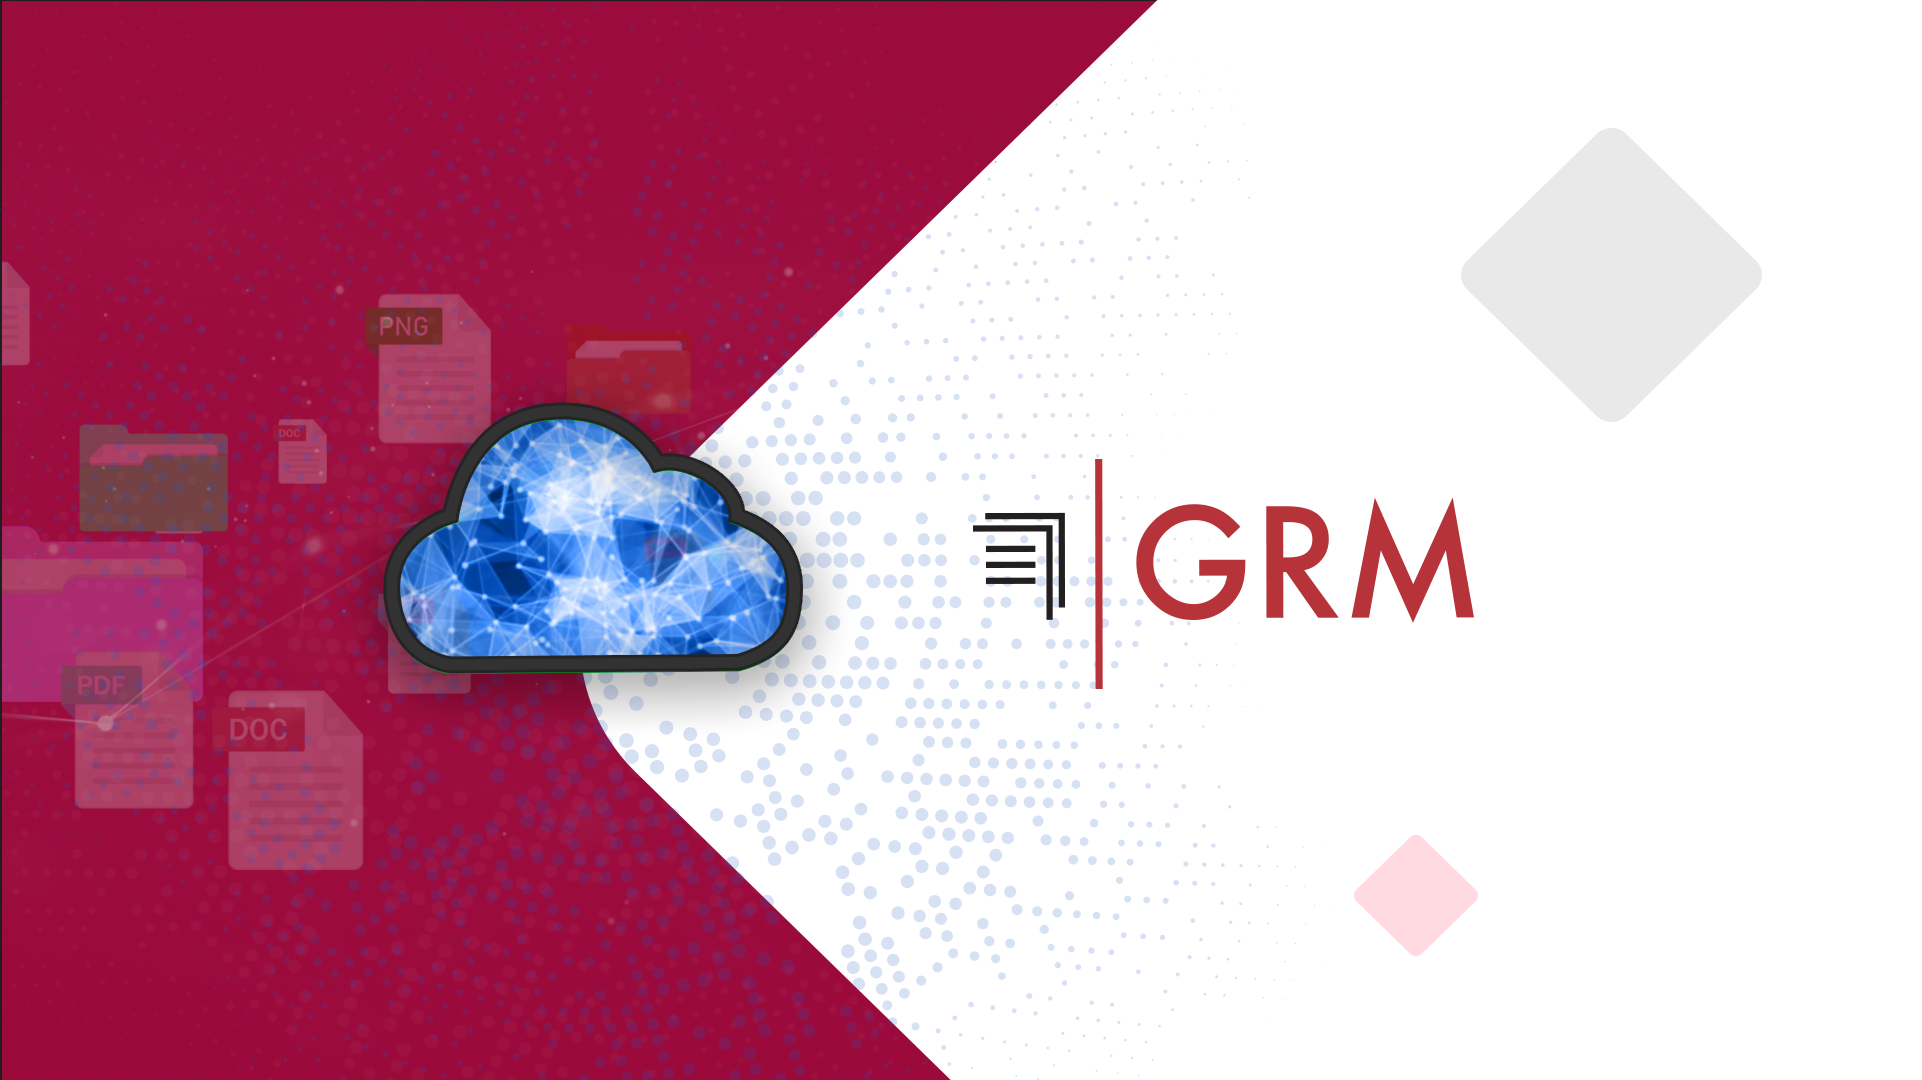 A modern and transformative ECM by GRM